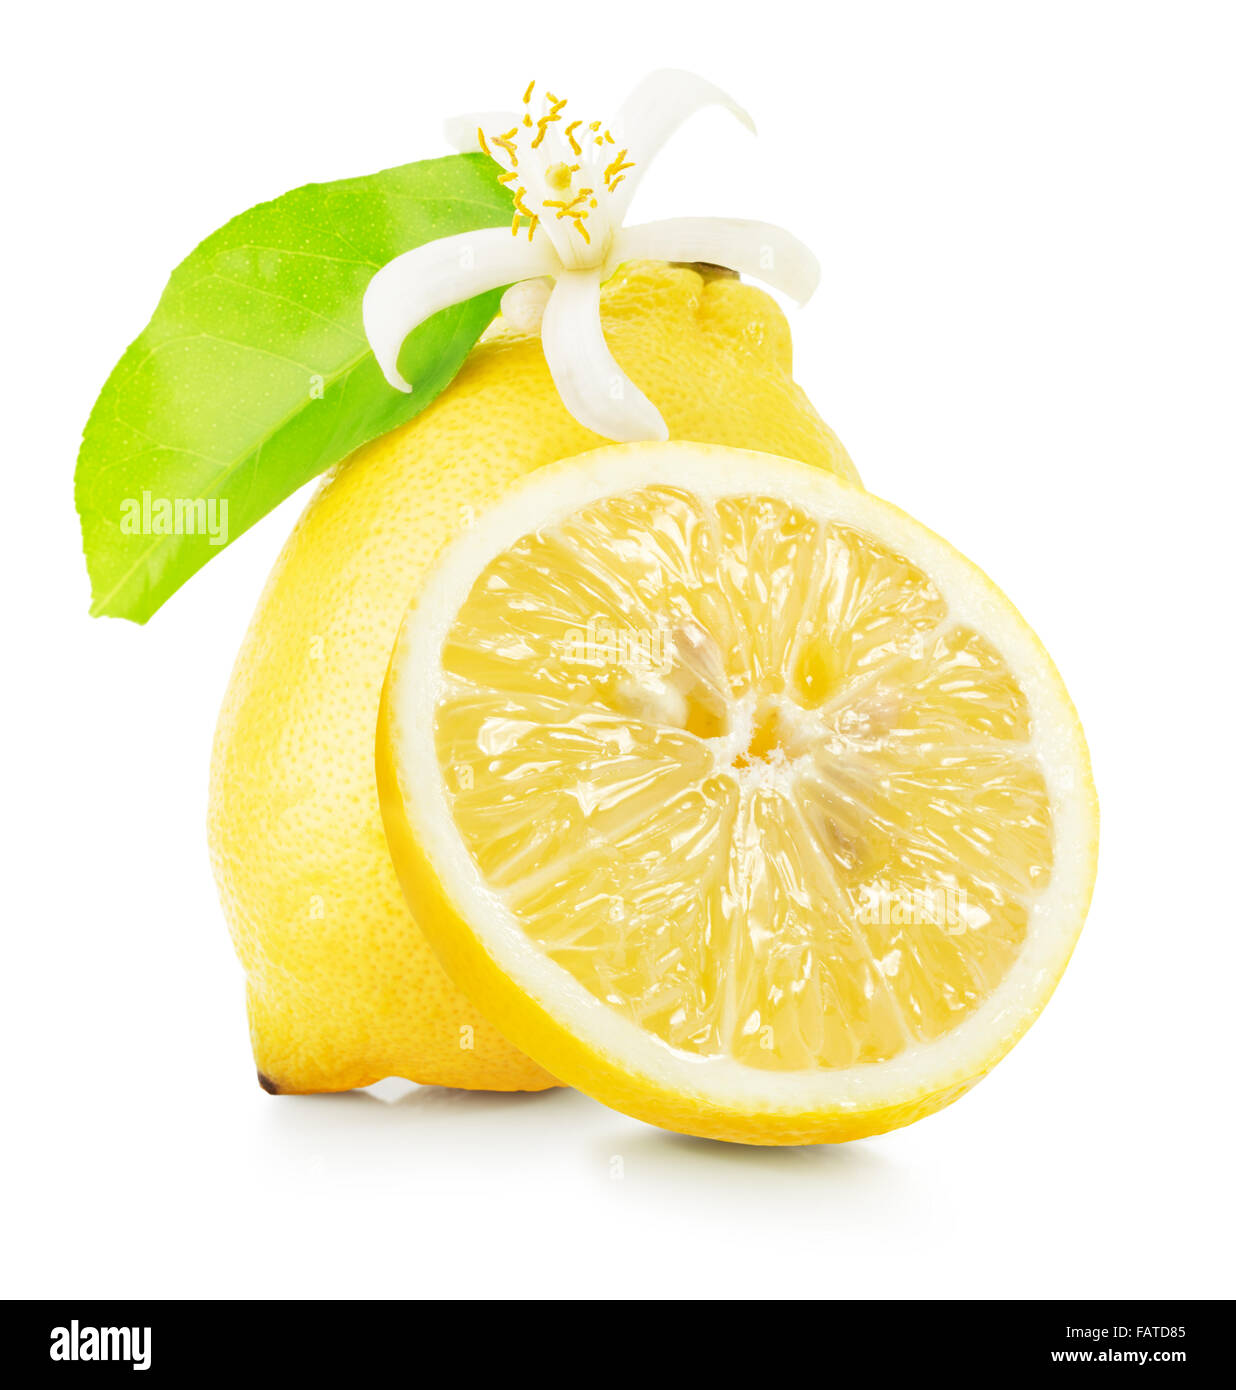 lemons with lemon flowers isolated on the white background. Stock Photo